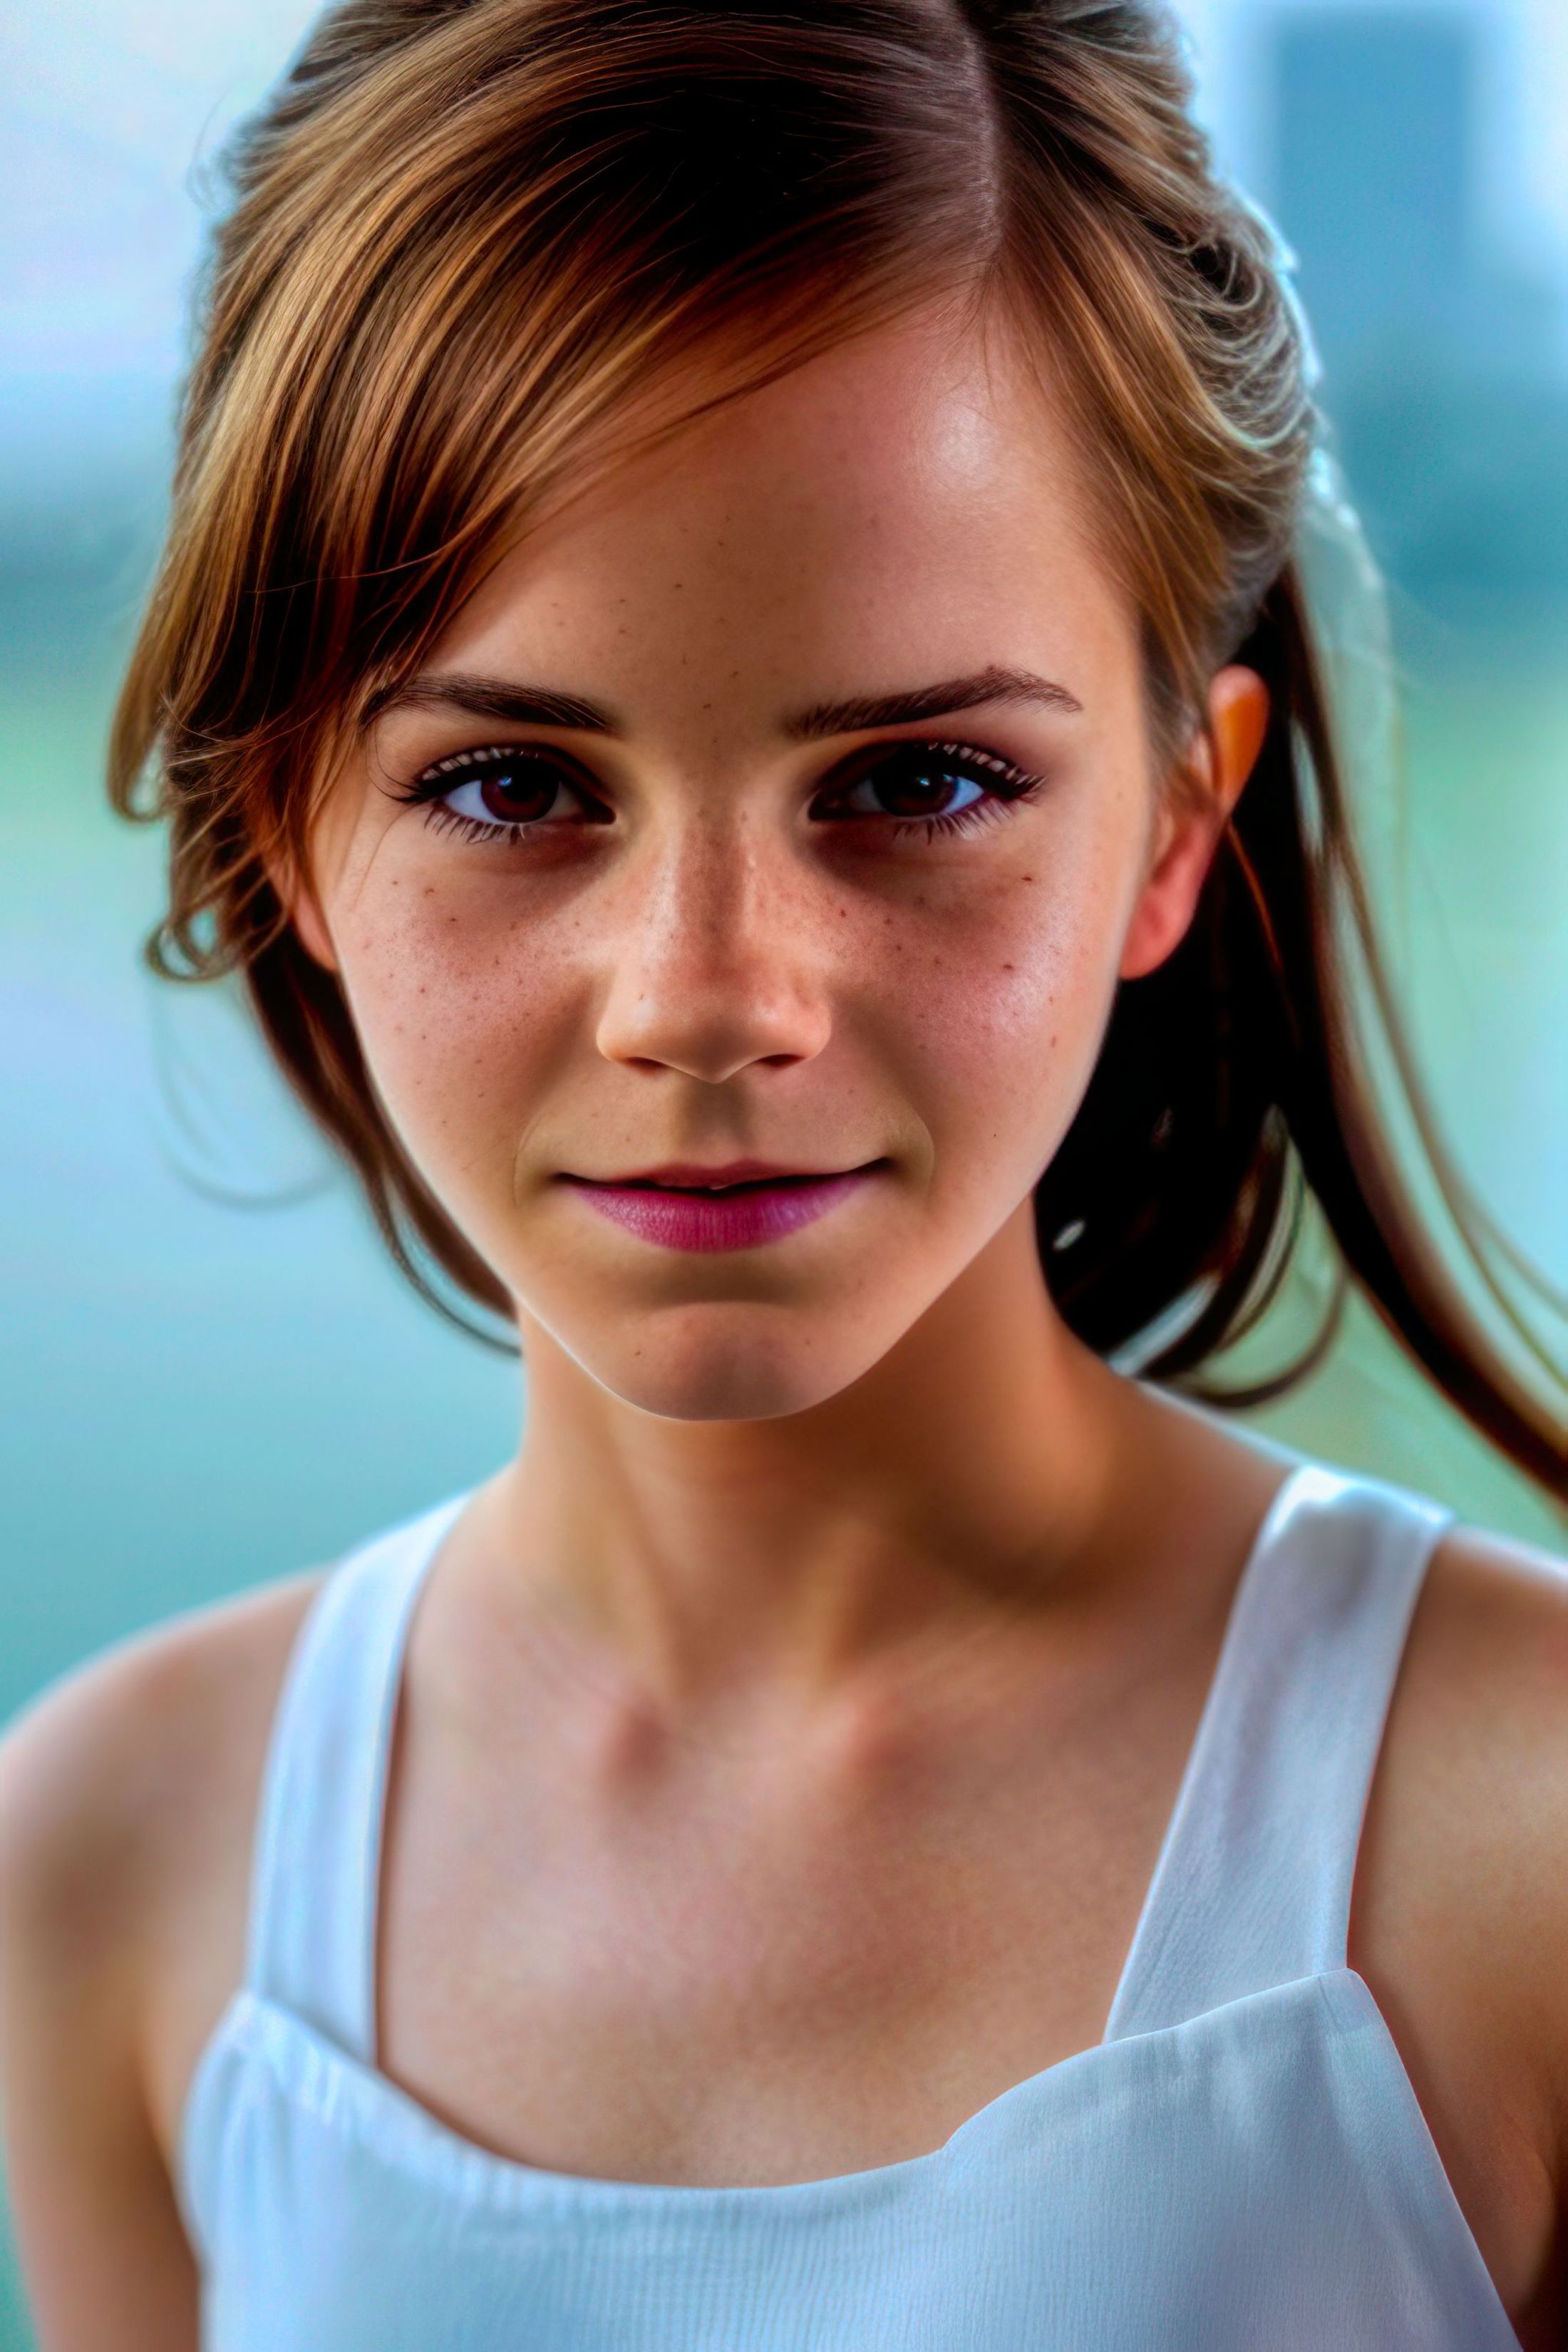 Emma Watson image by Cyberdelia